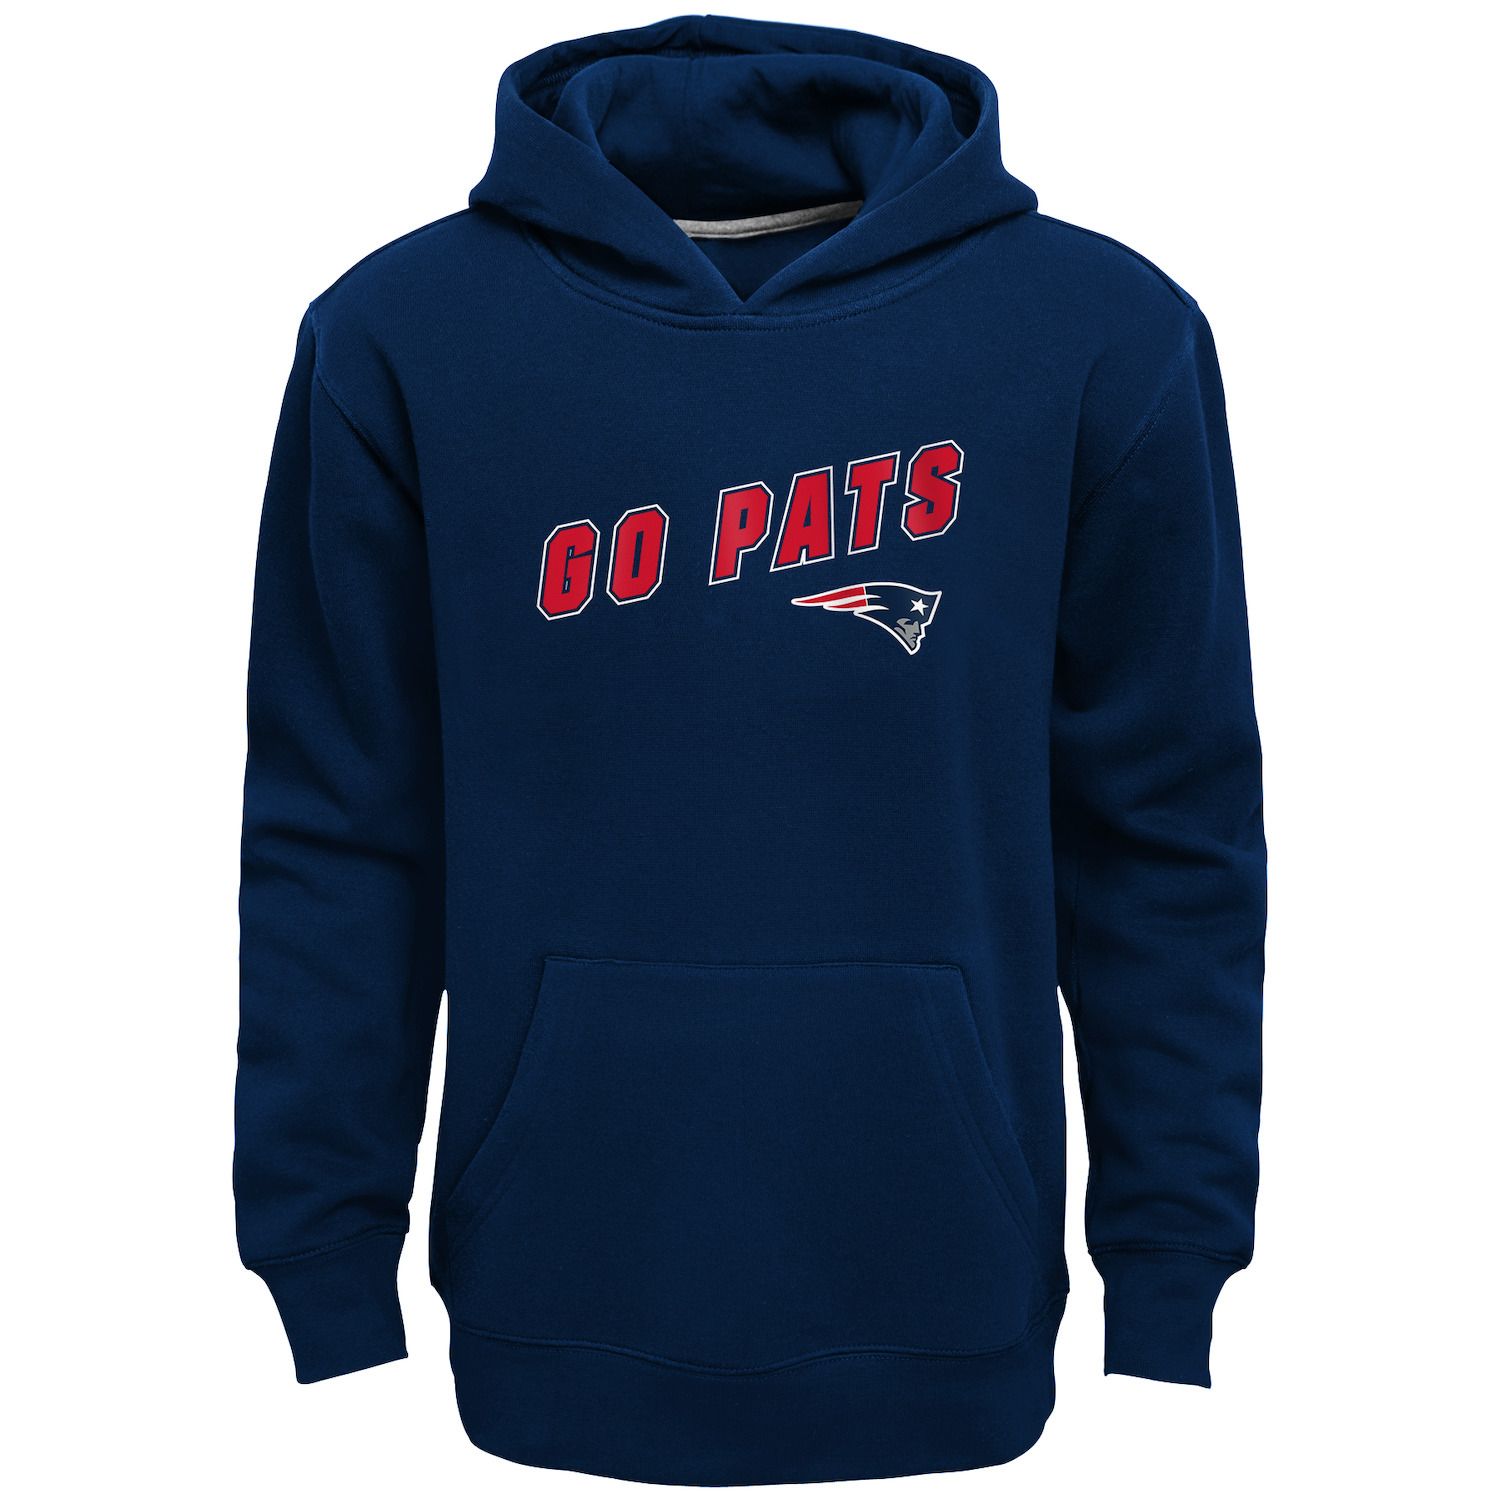 Boys NFL New England Patriots Hoodies u0026 Sweatshirts Kids Tops